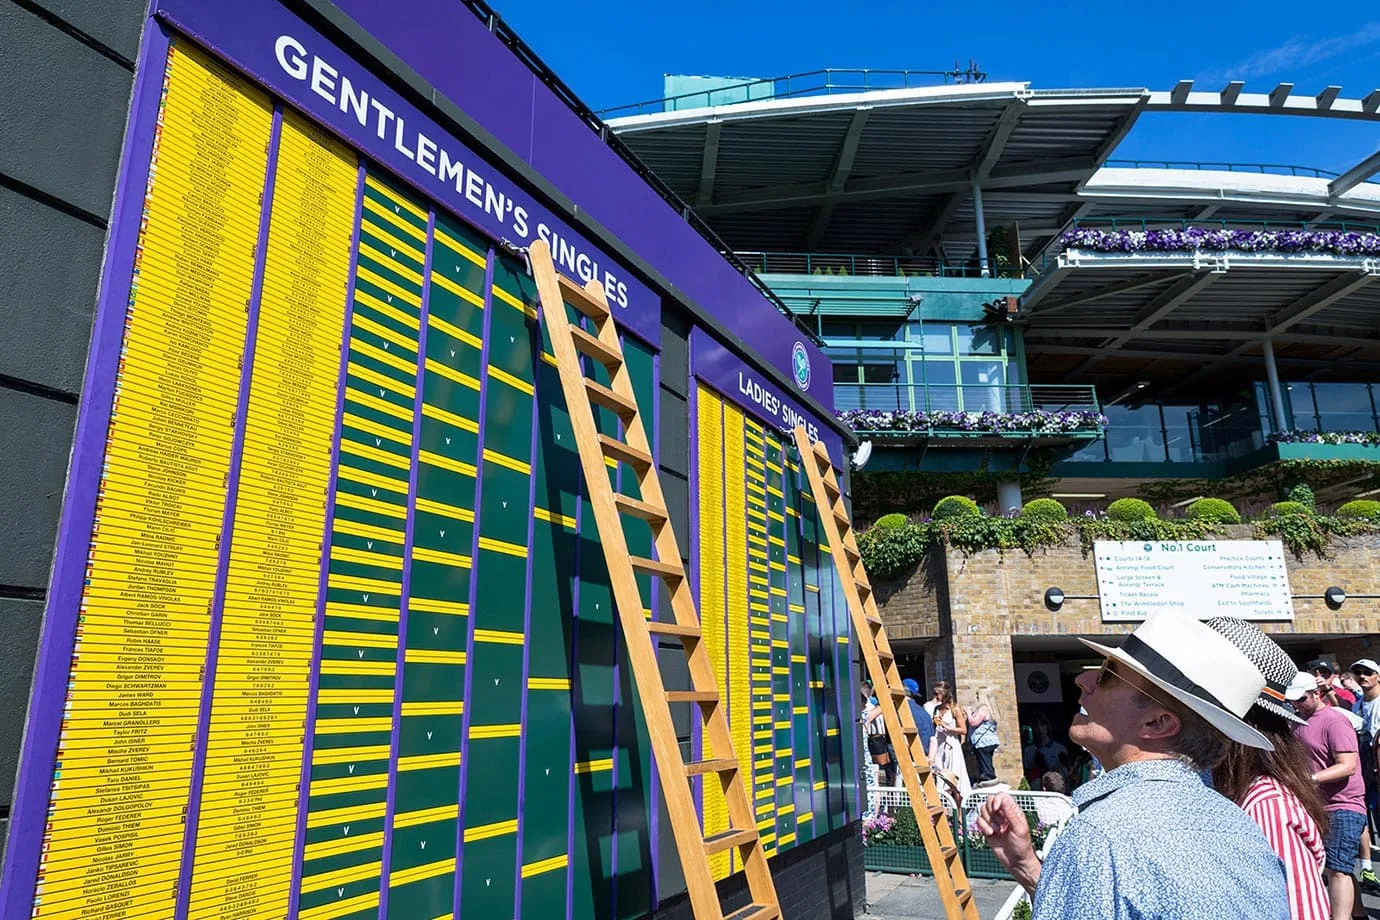 Order of Play board, Wimbledon